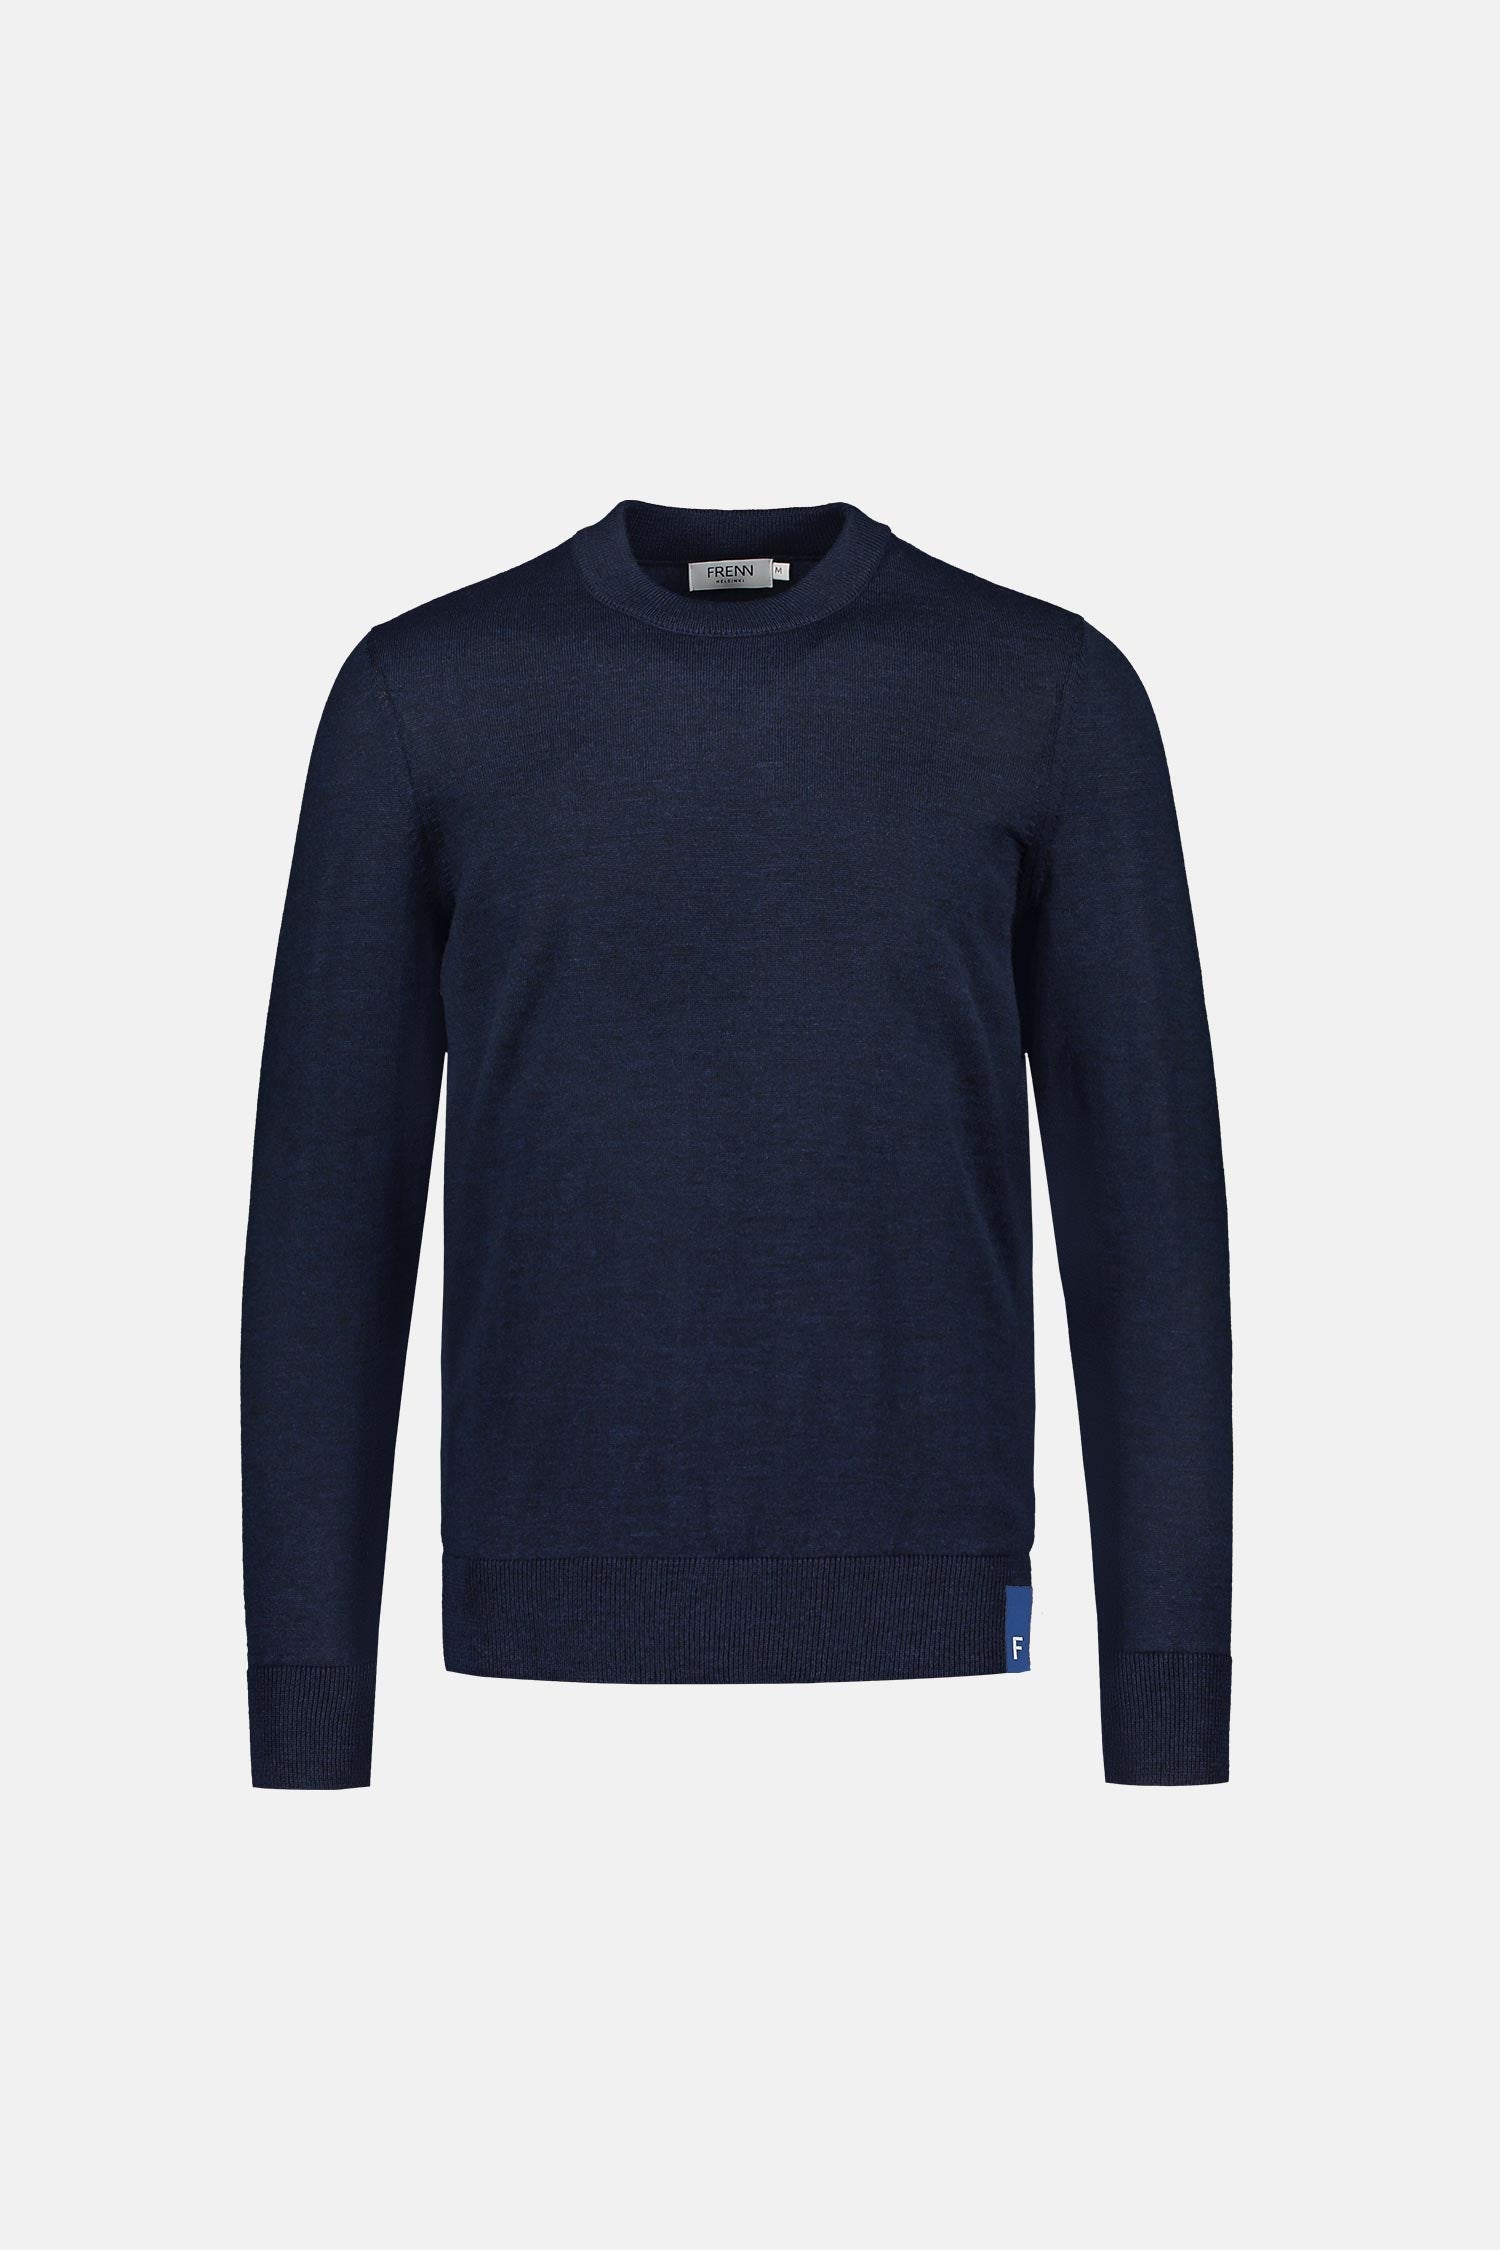 Frenn Daniel sustainable premium quality extra fine merino wool pullover blue